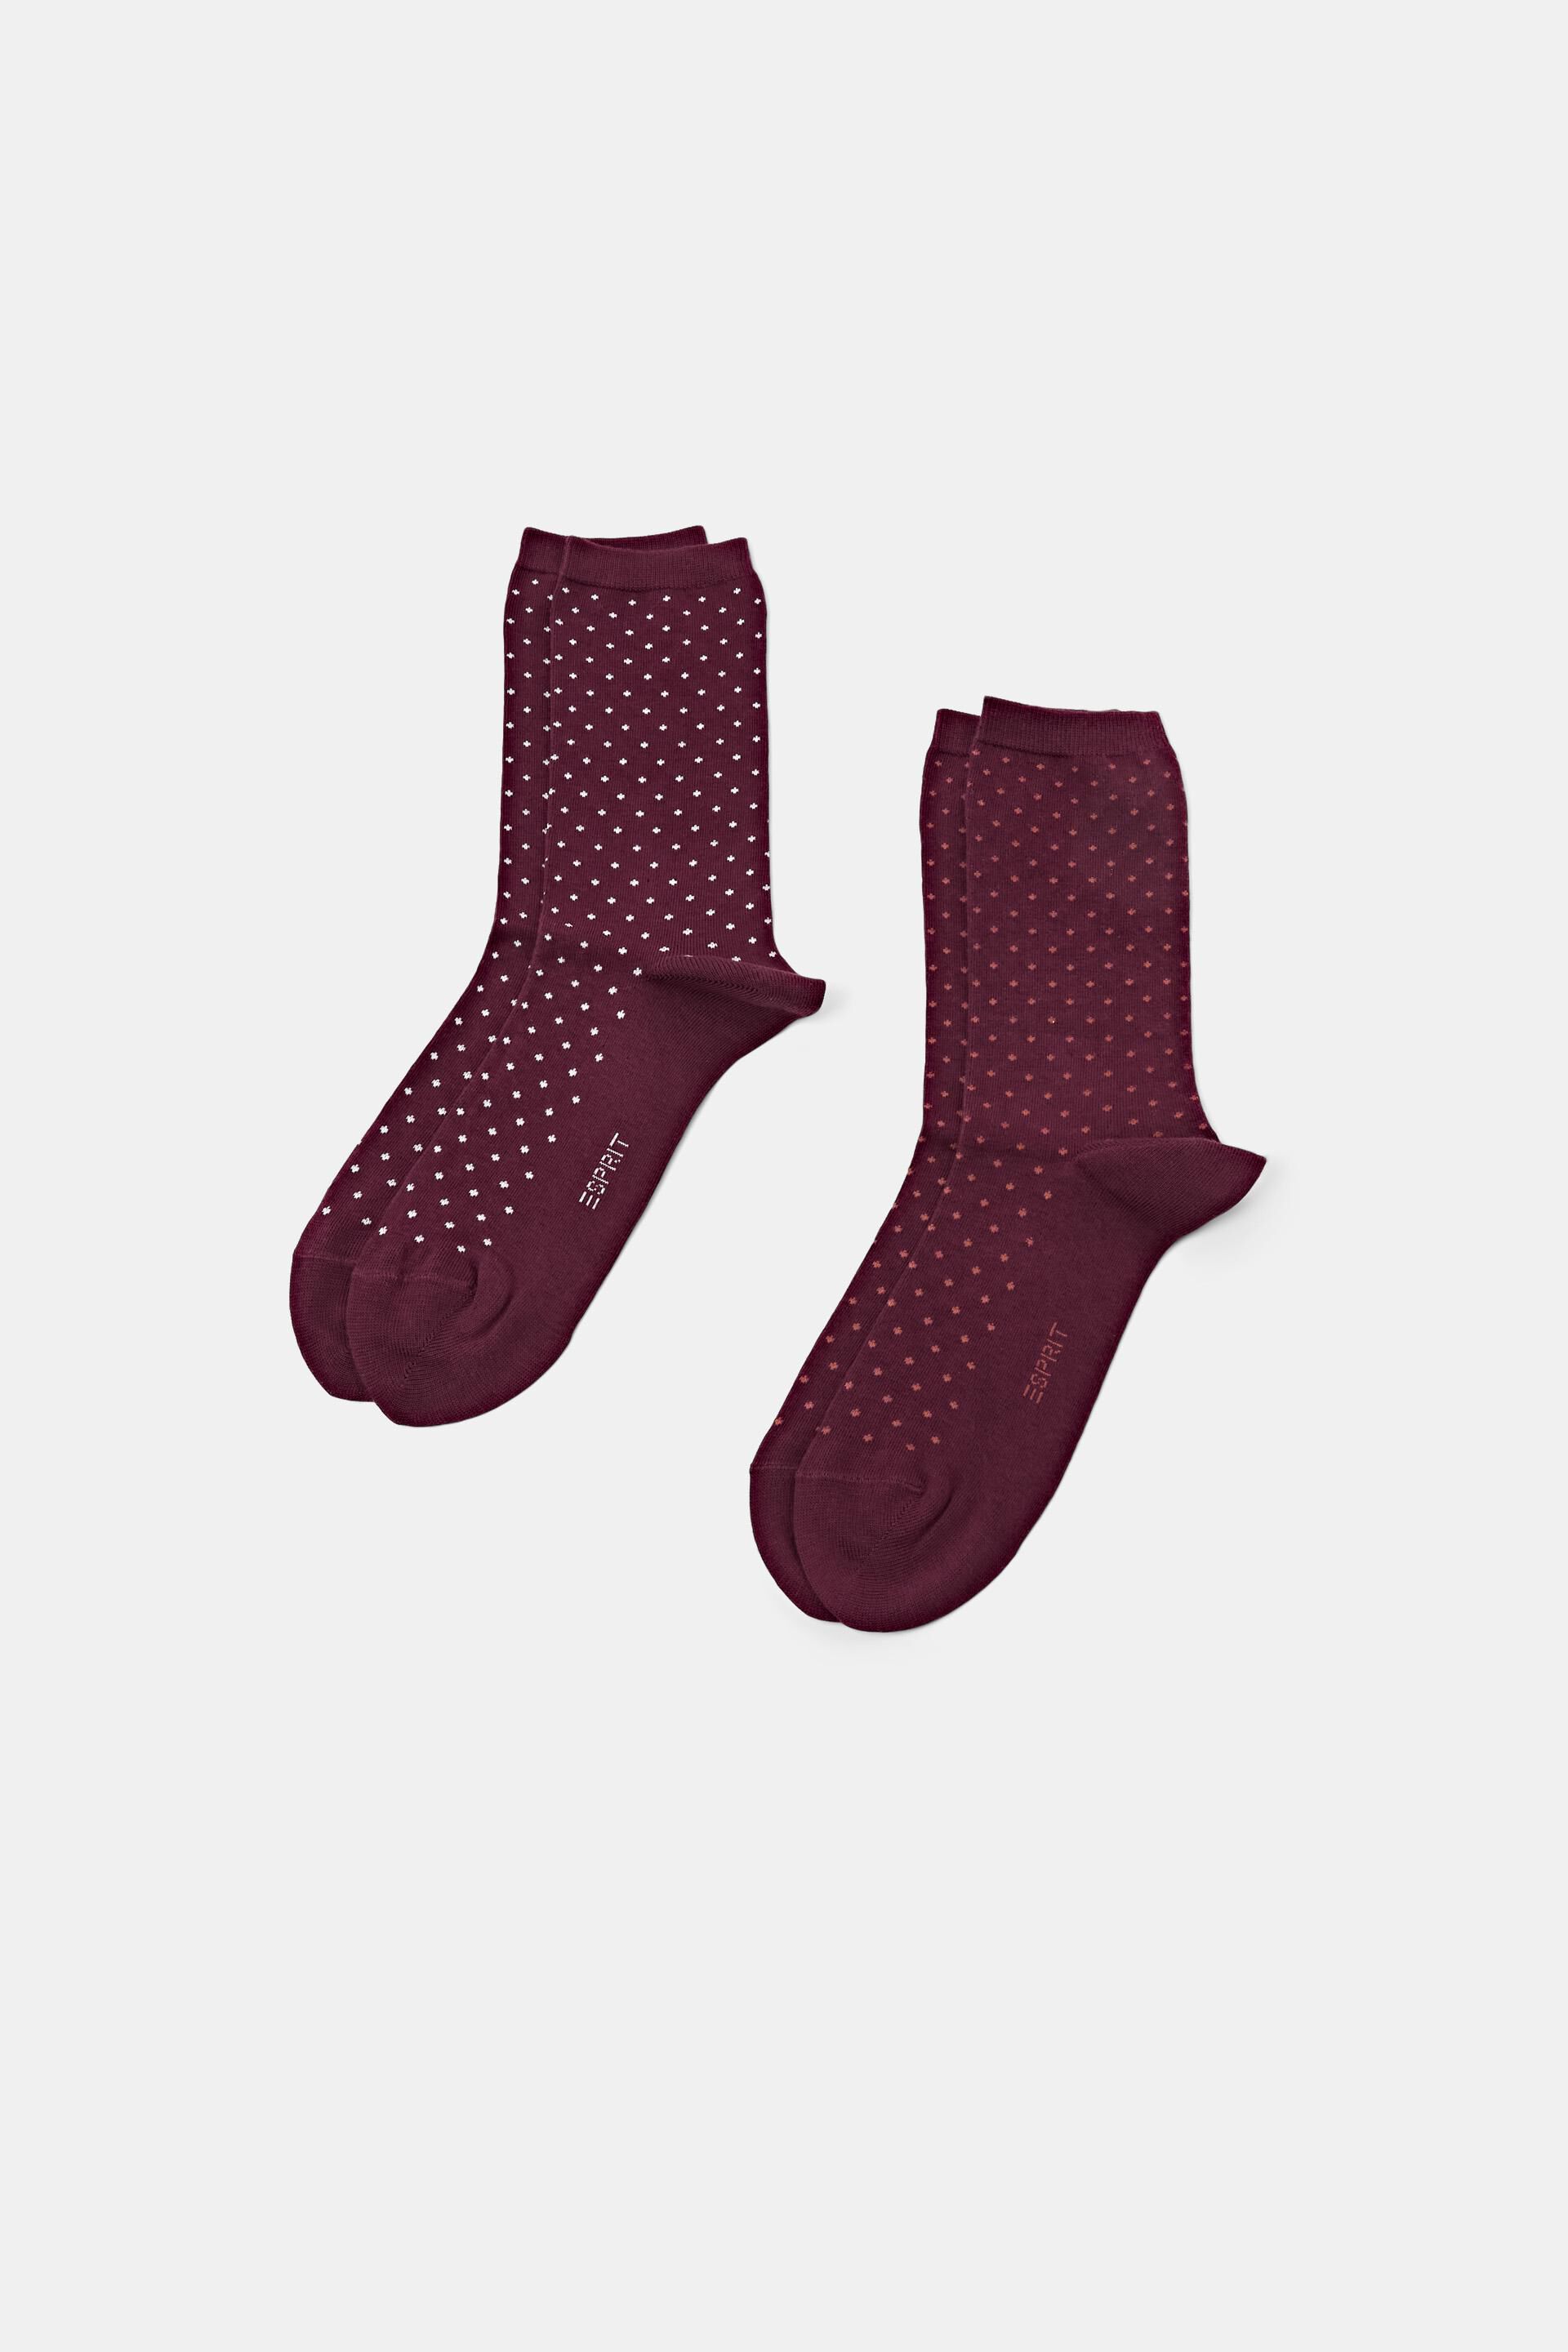 Esprit dot 2-pack polka cotton socks, of organic